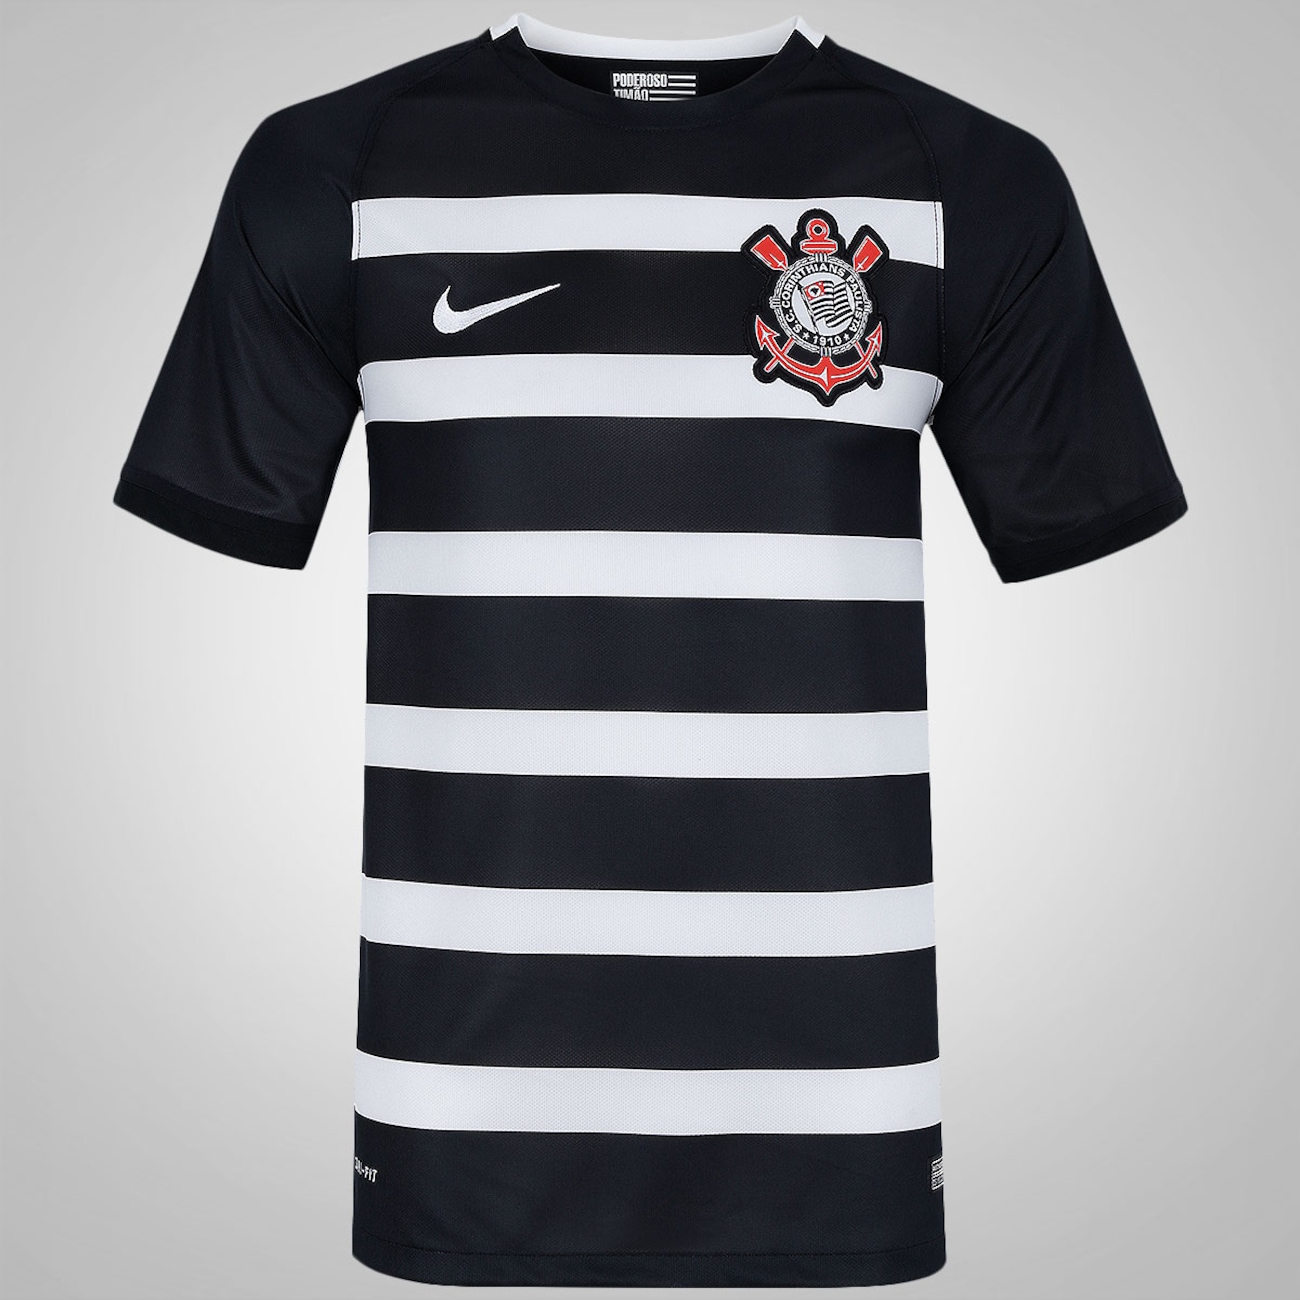 Camisa do Corinthians II 2015 Nike - Torcedor - Masculino